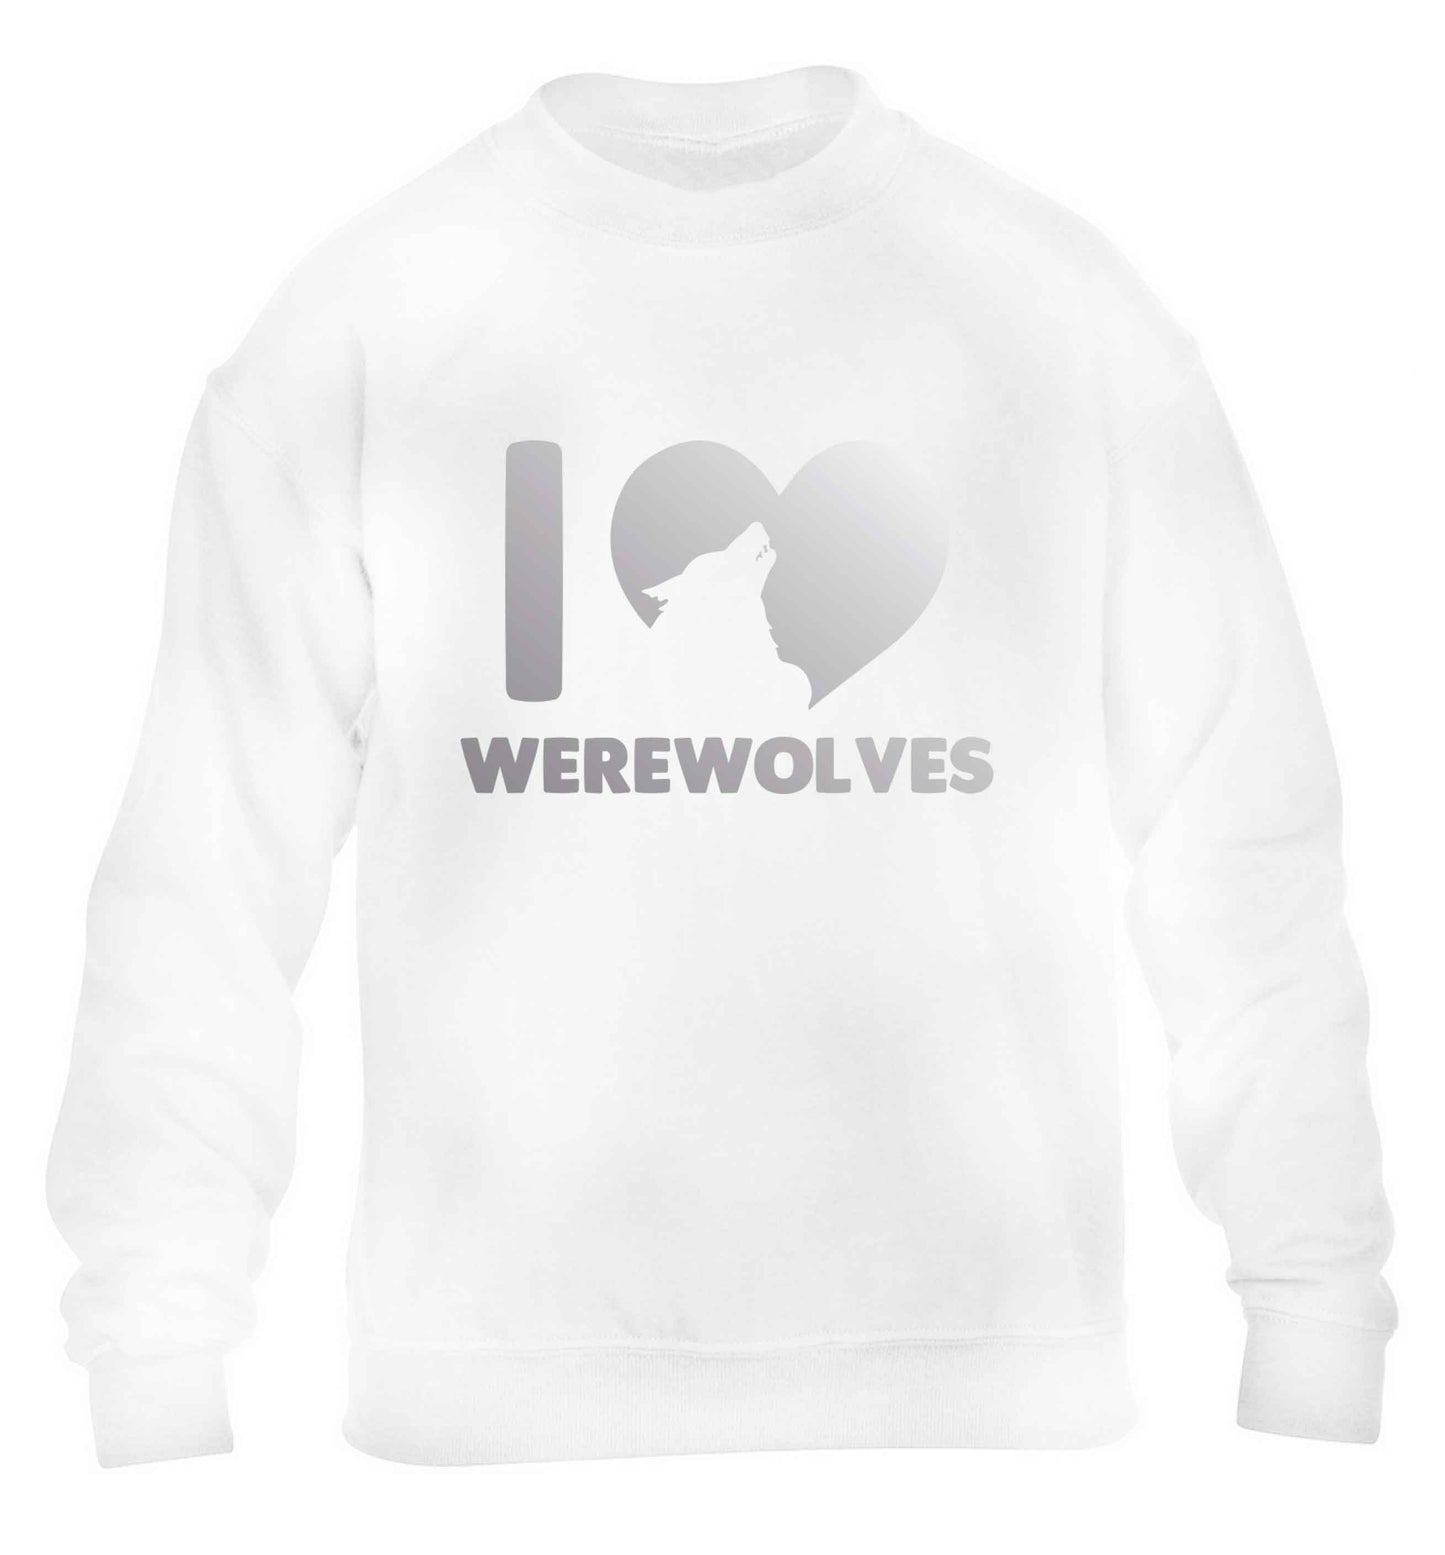 I love werewolves children's white sweater 12-13 Years